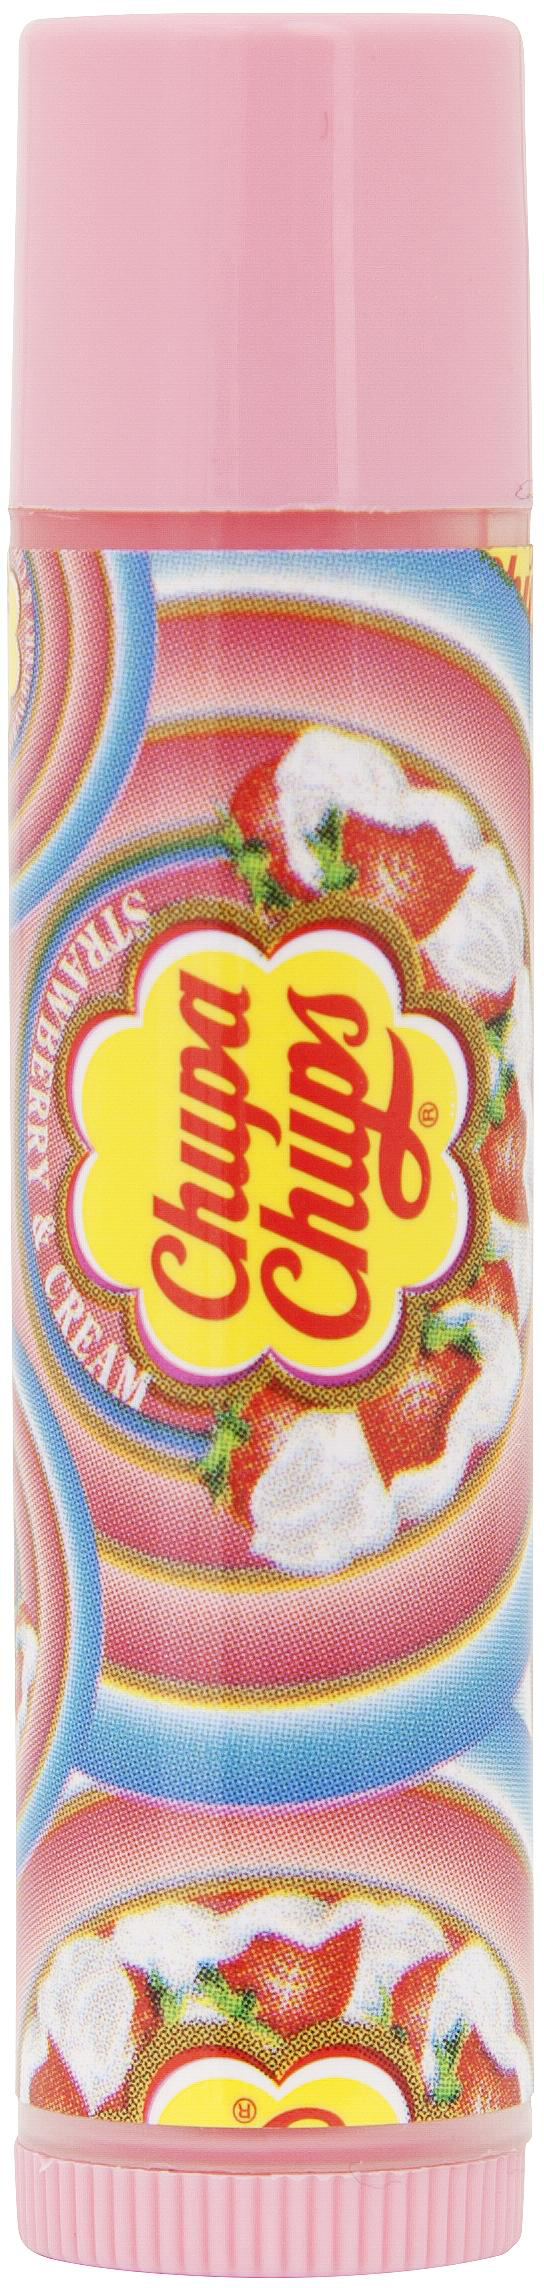 Lip Smacker Chupa Chups Lip Balm Strawberry & Cream